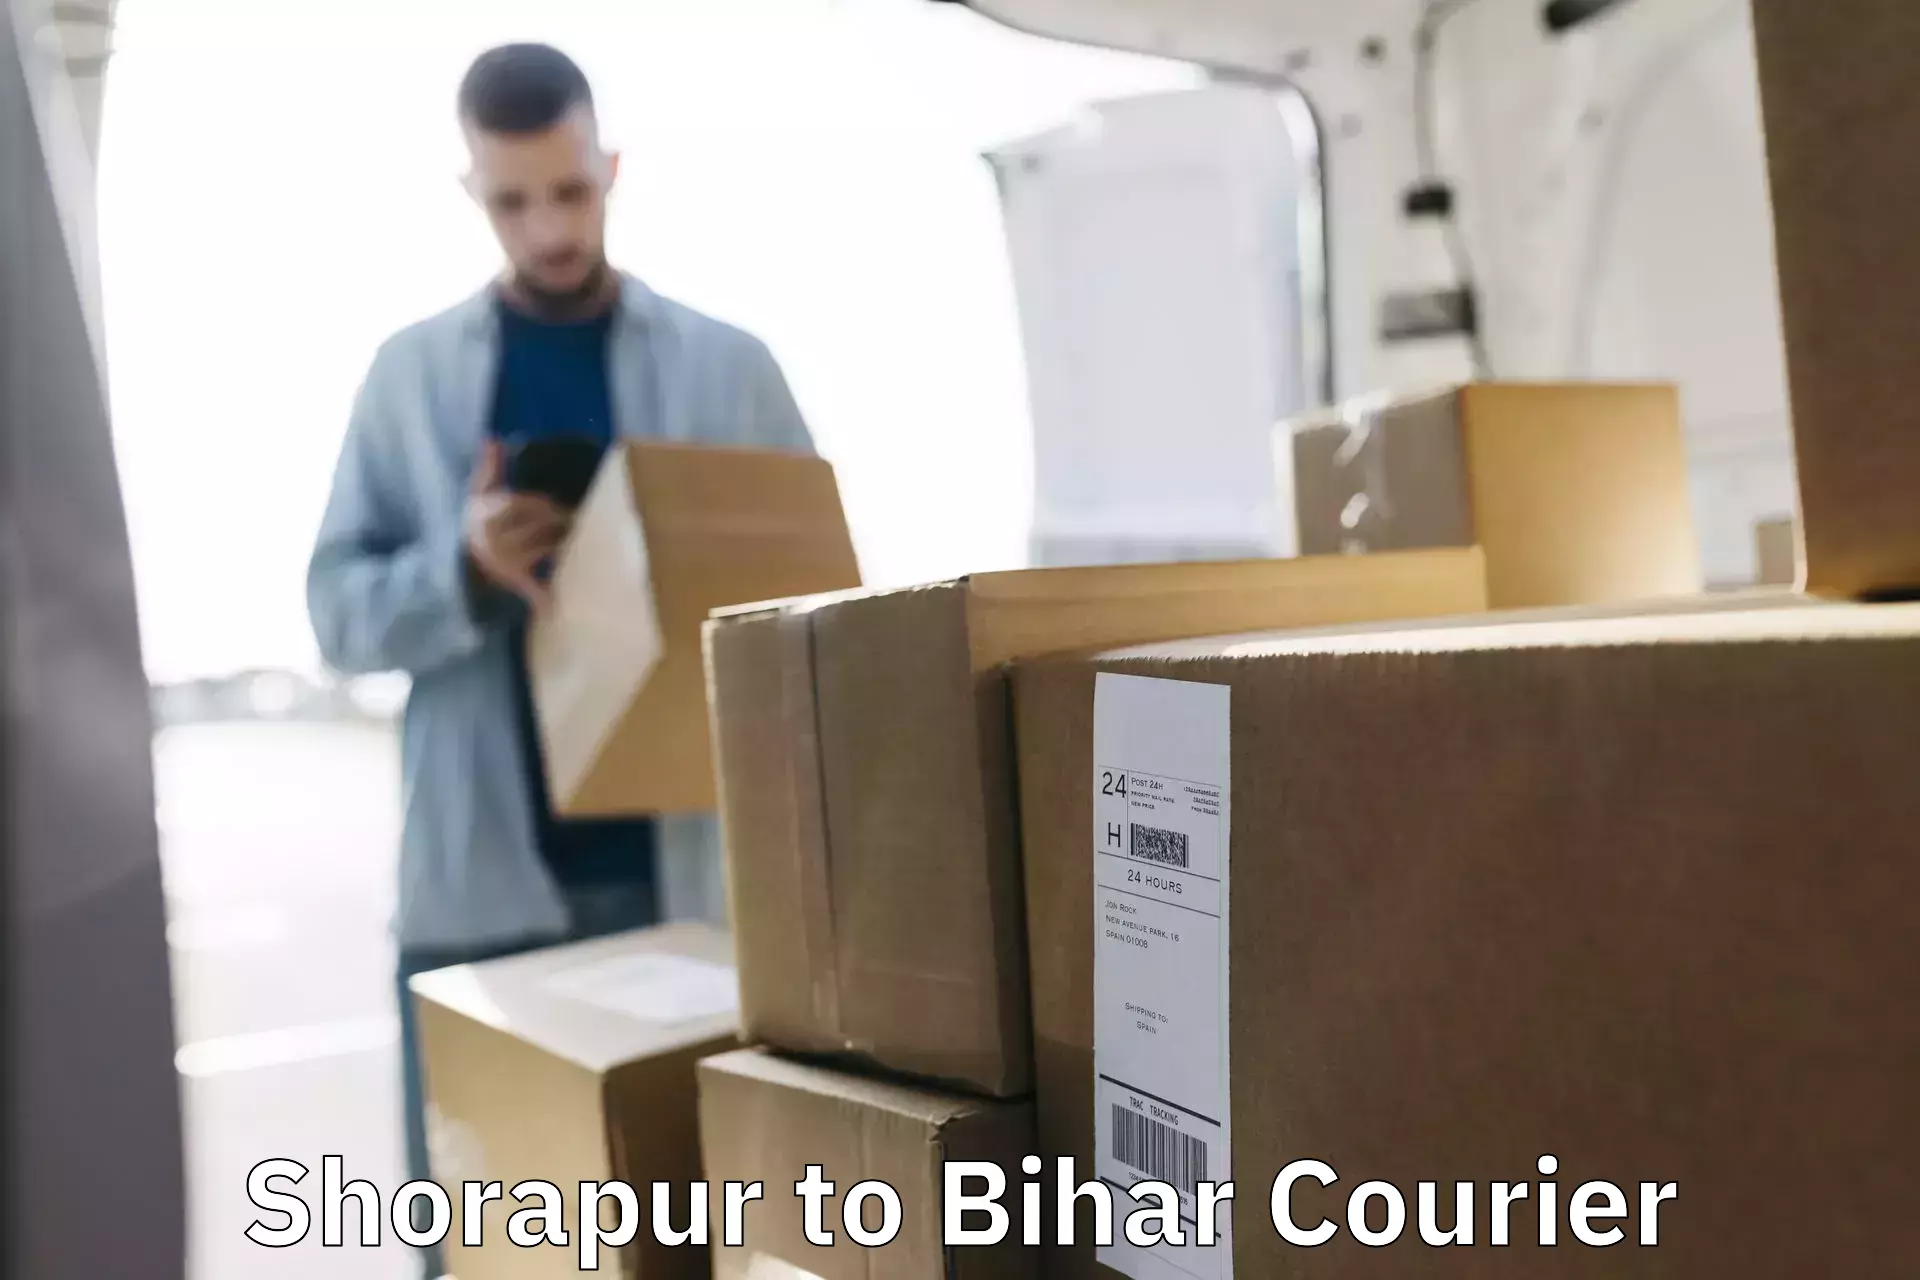 Next-day delivery options Shorapur to Aurangabad Bihar